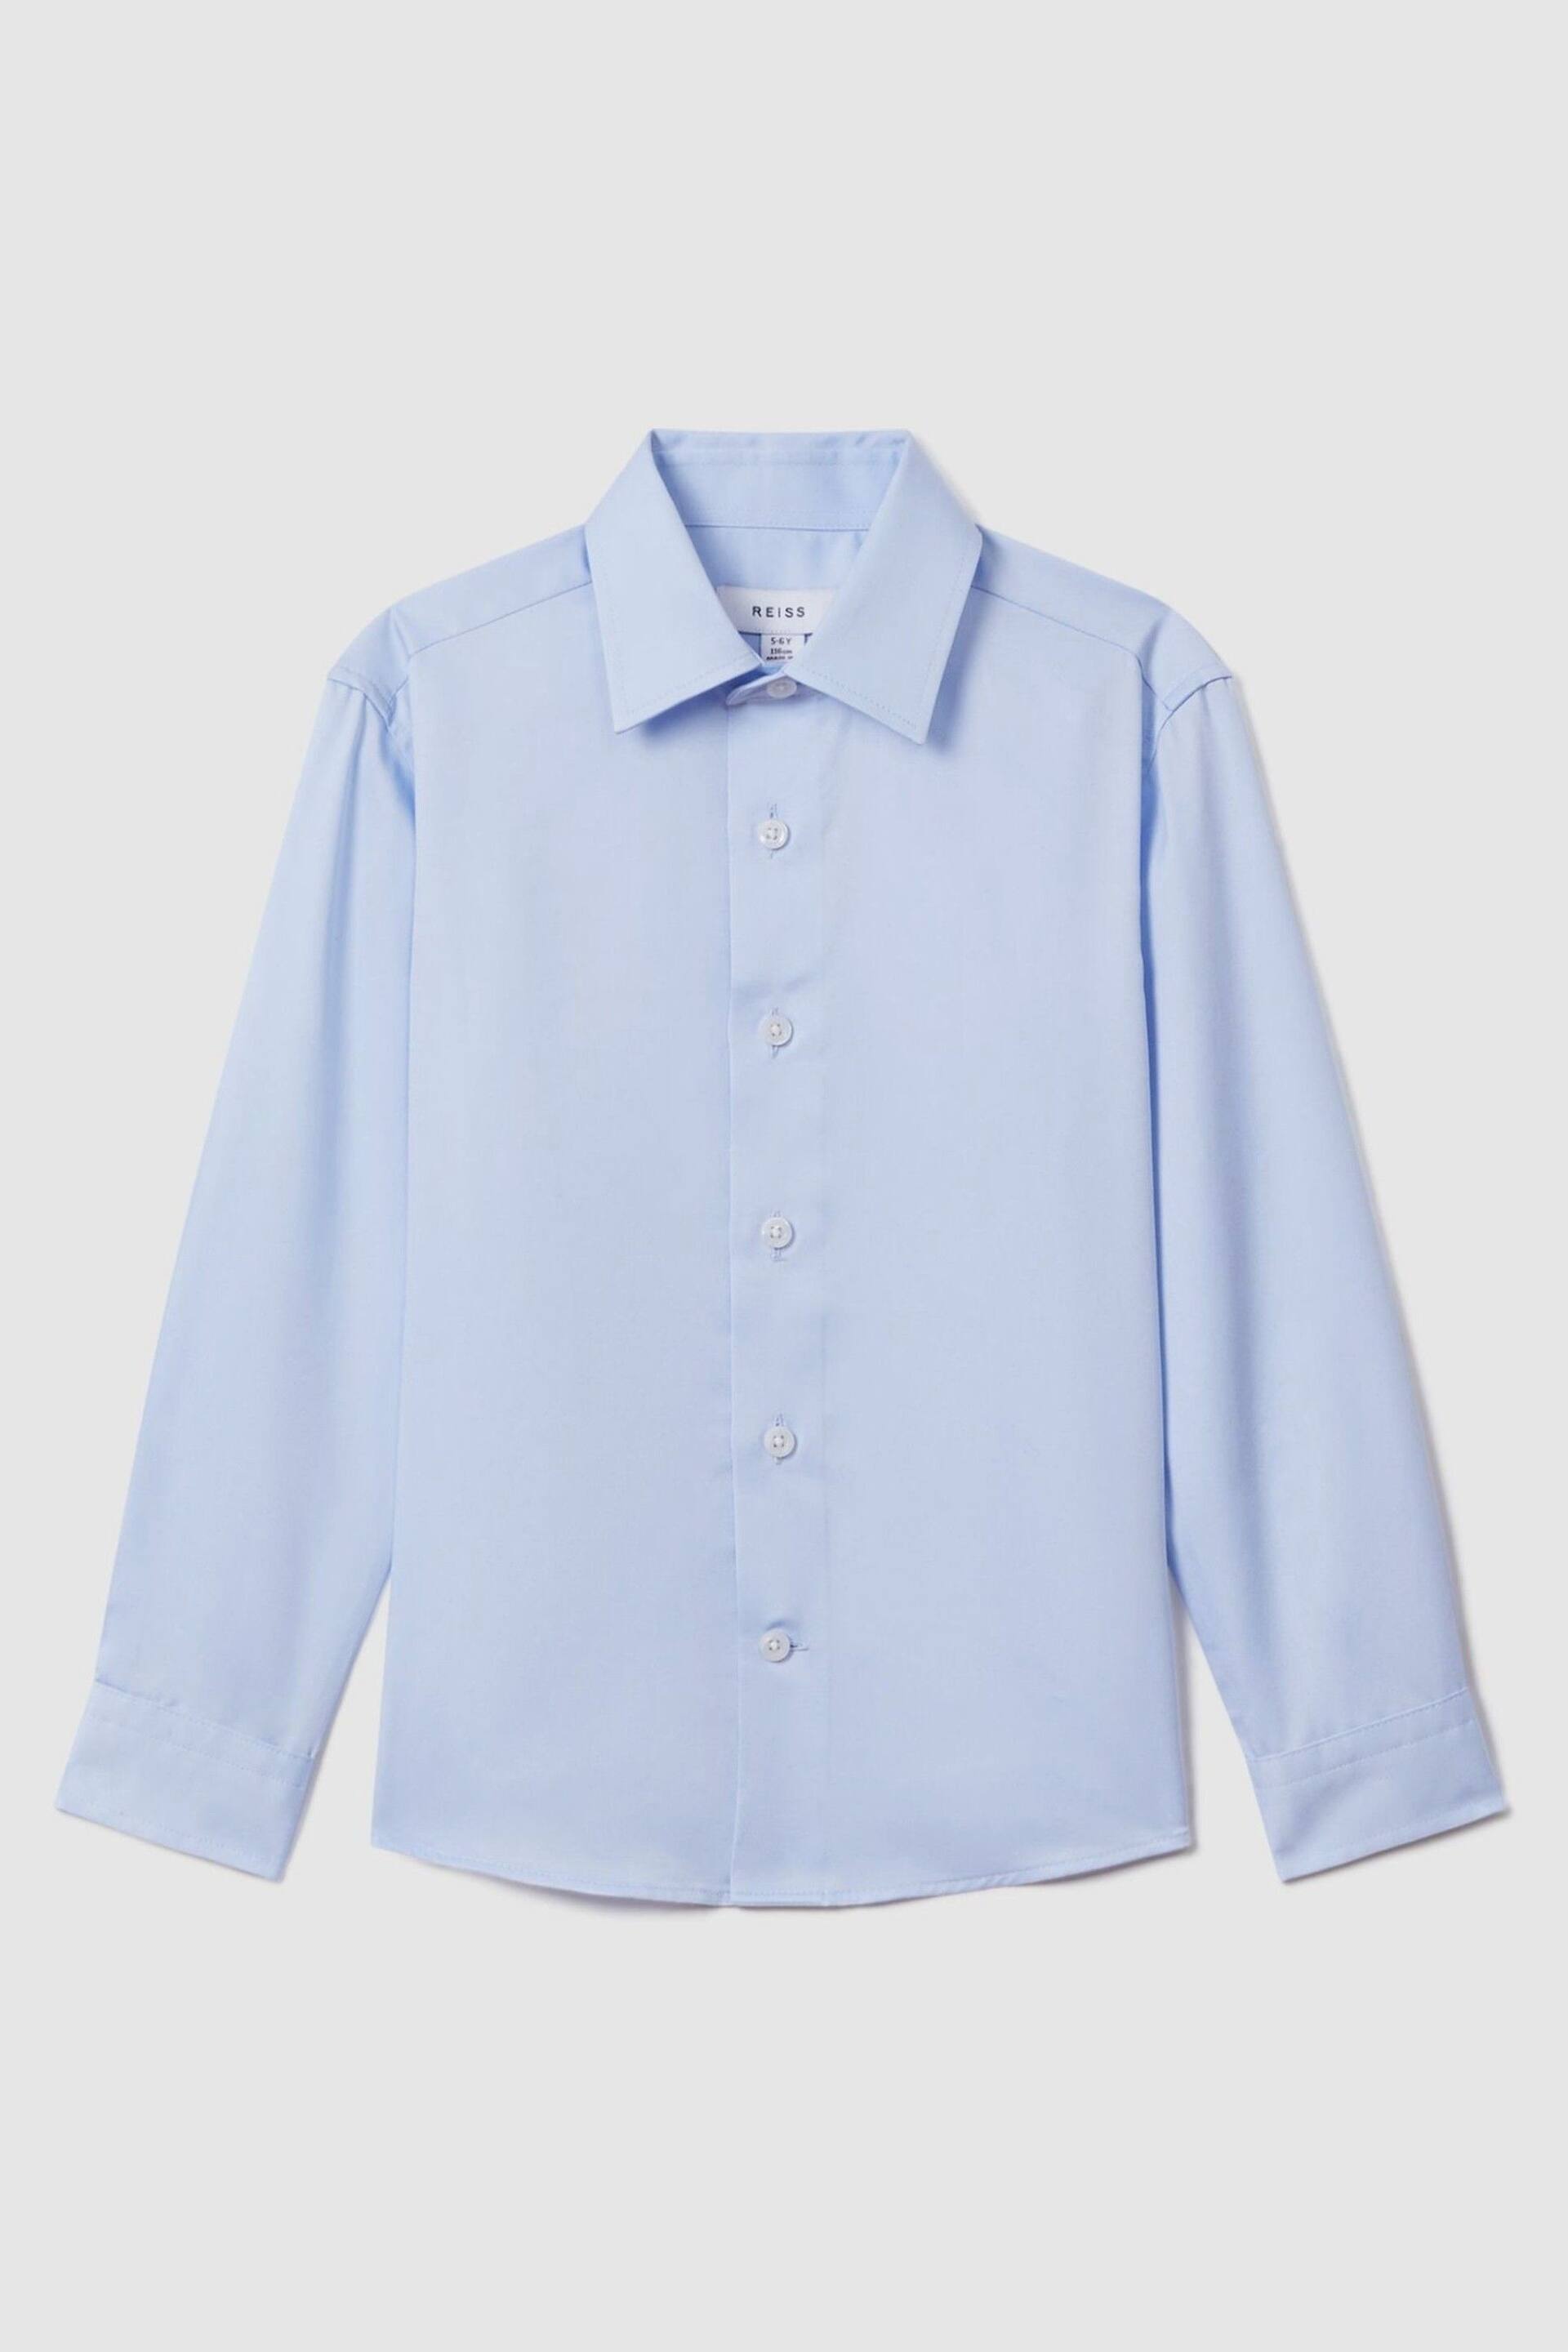 Reiss Soft Blue Remote Junior Slim Fit Cotton Shirt - Image 2 of 4